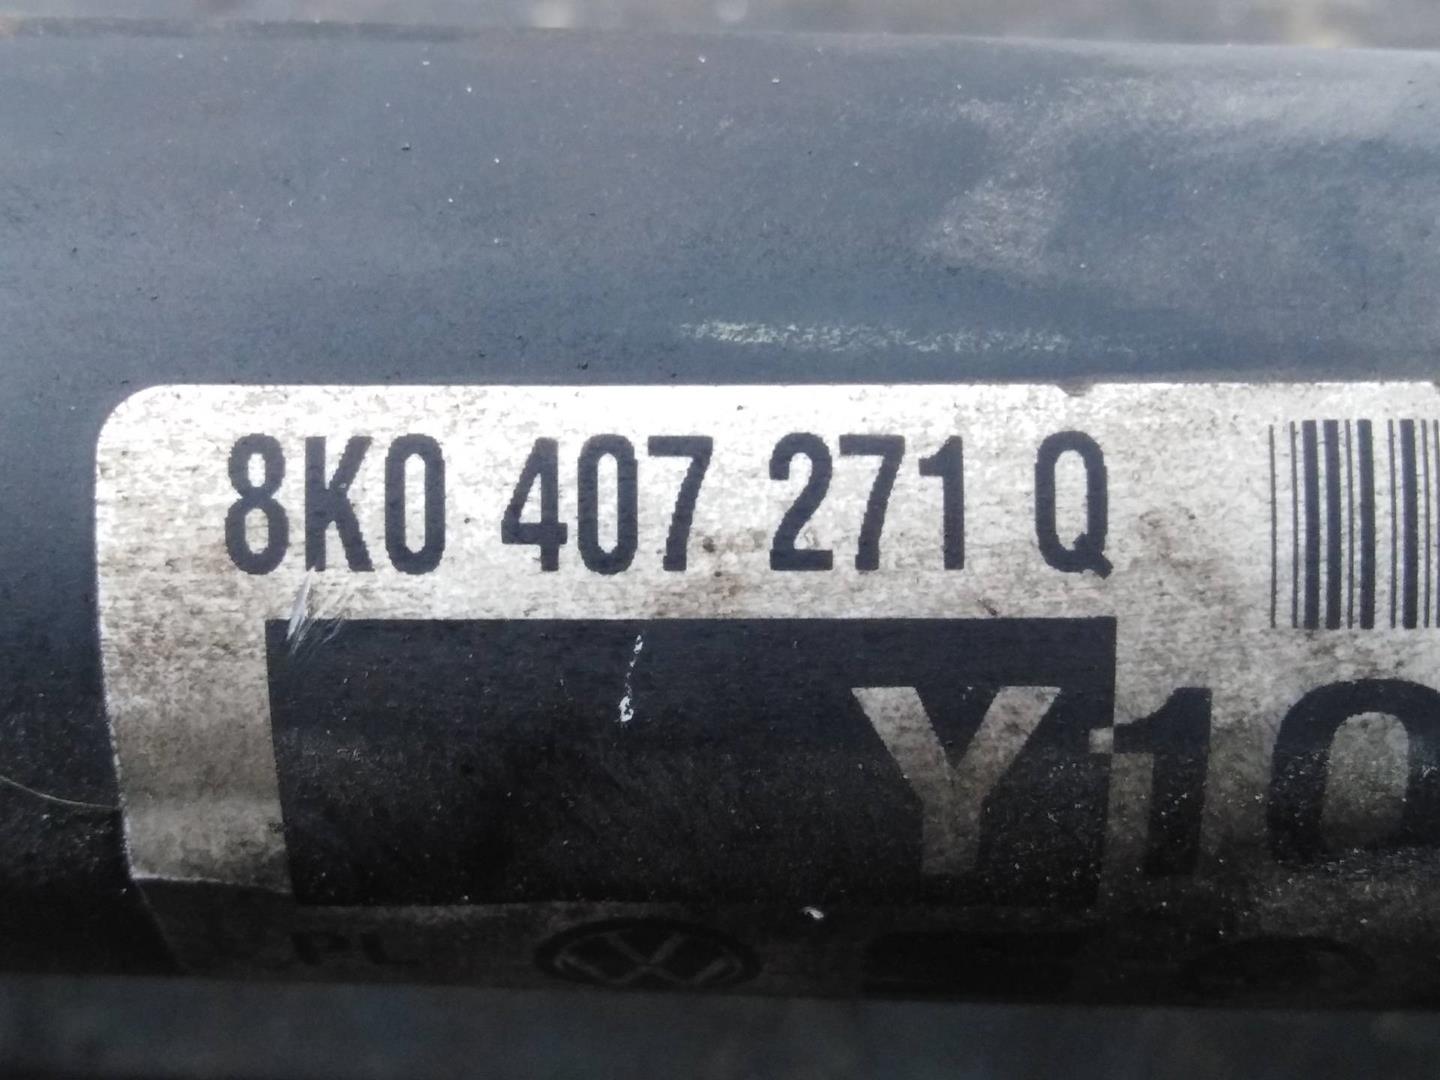 AUDI A4 B8/8K (2011-2016) Front Left Driveshaft 8K0407271Q, P1-B6-17 24023272